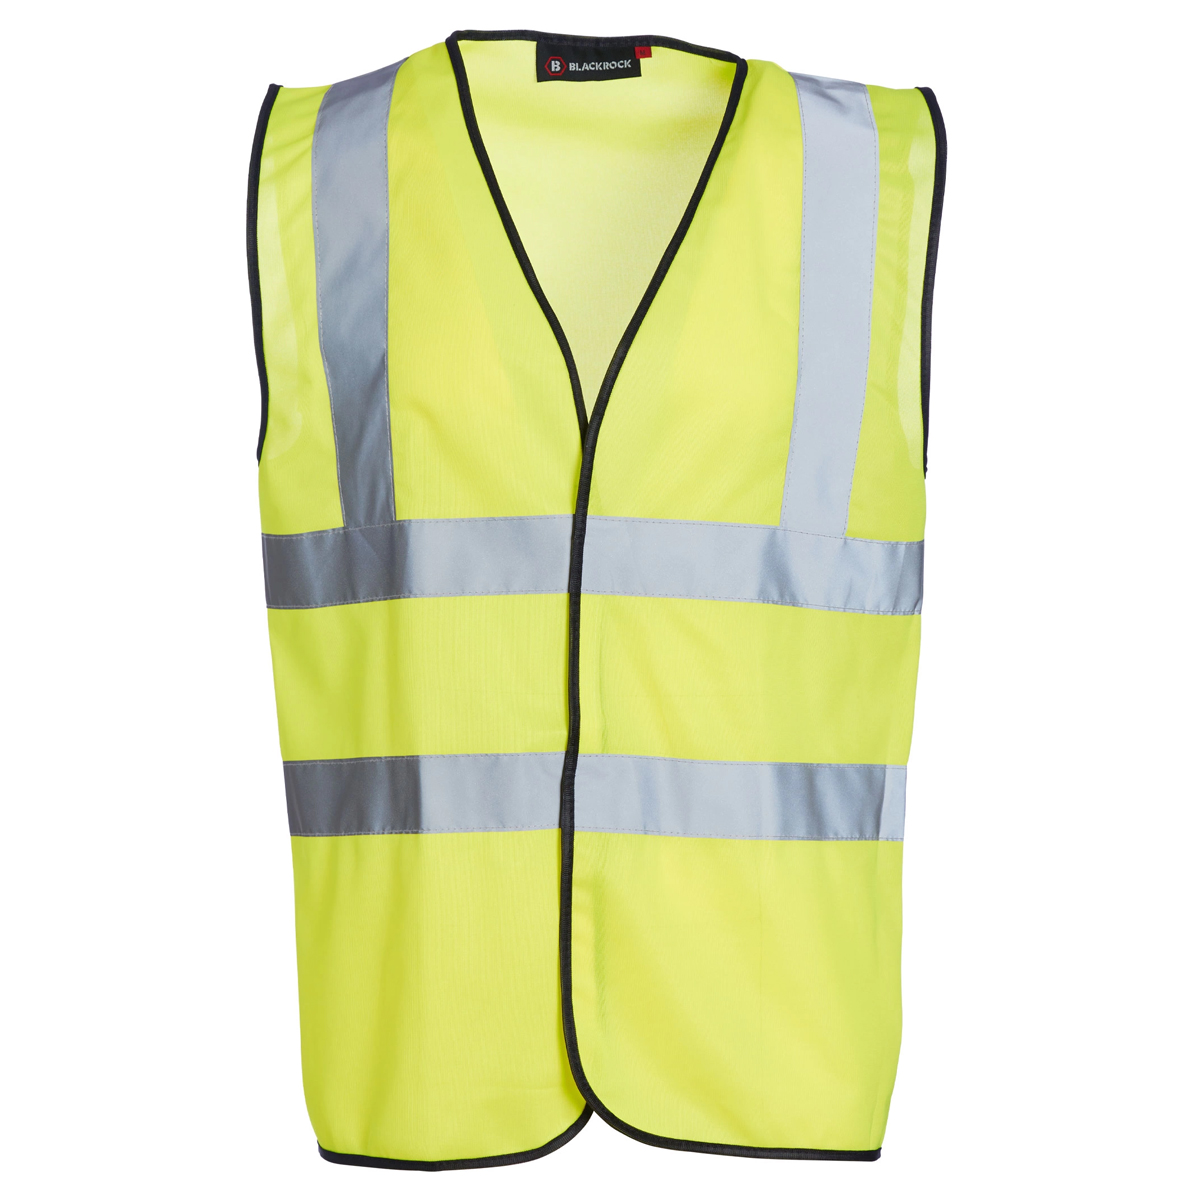 Sleeveless hi vis waistcoat vest 80300 - yellow - large